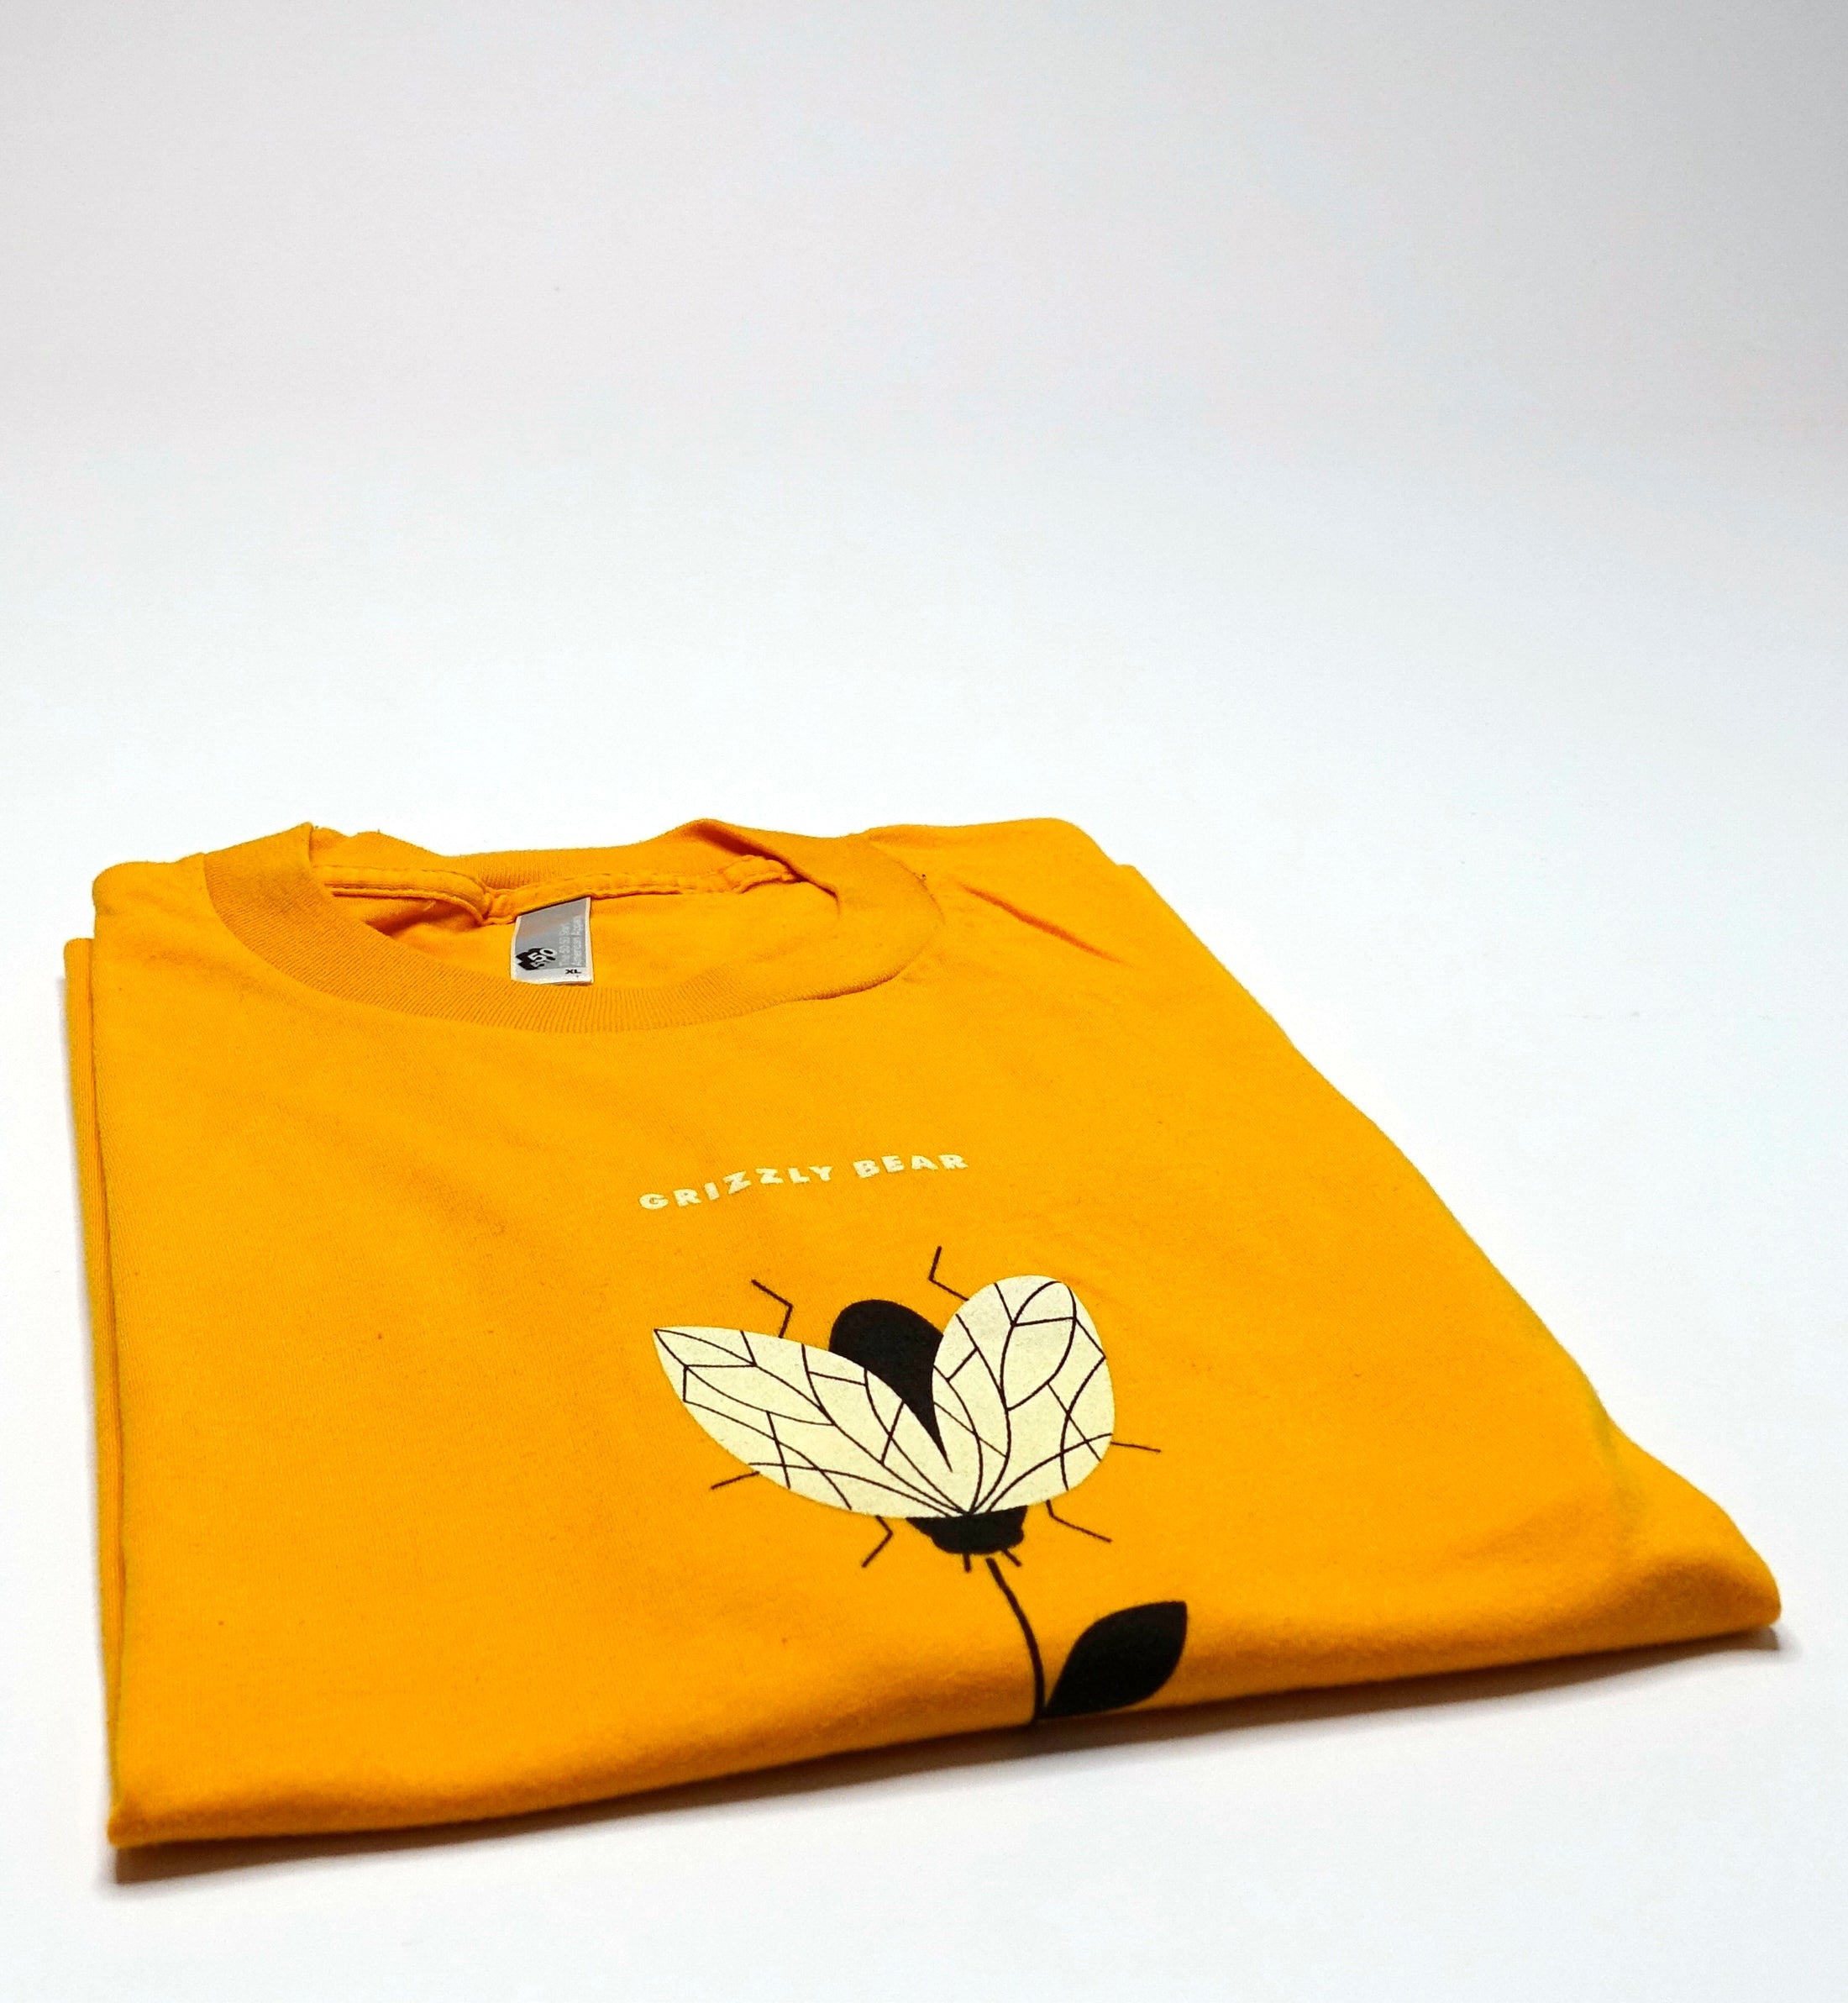 Grizzly Bear – Fly Flower Veckatimest 2012 Tour Shirt Size XL